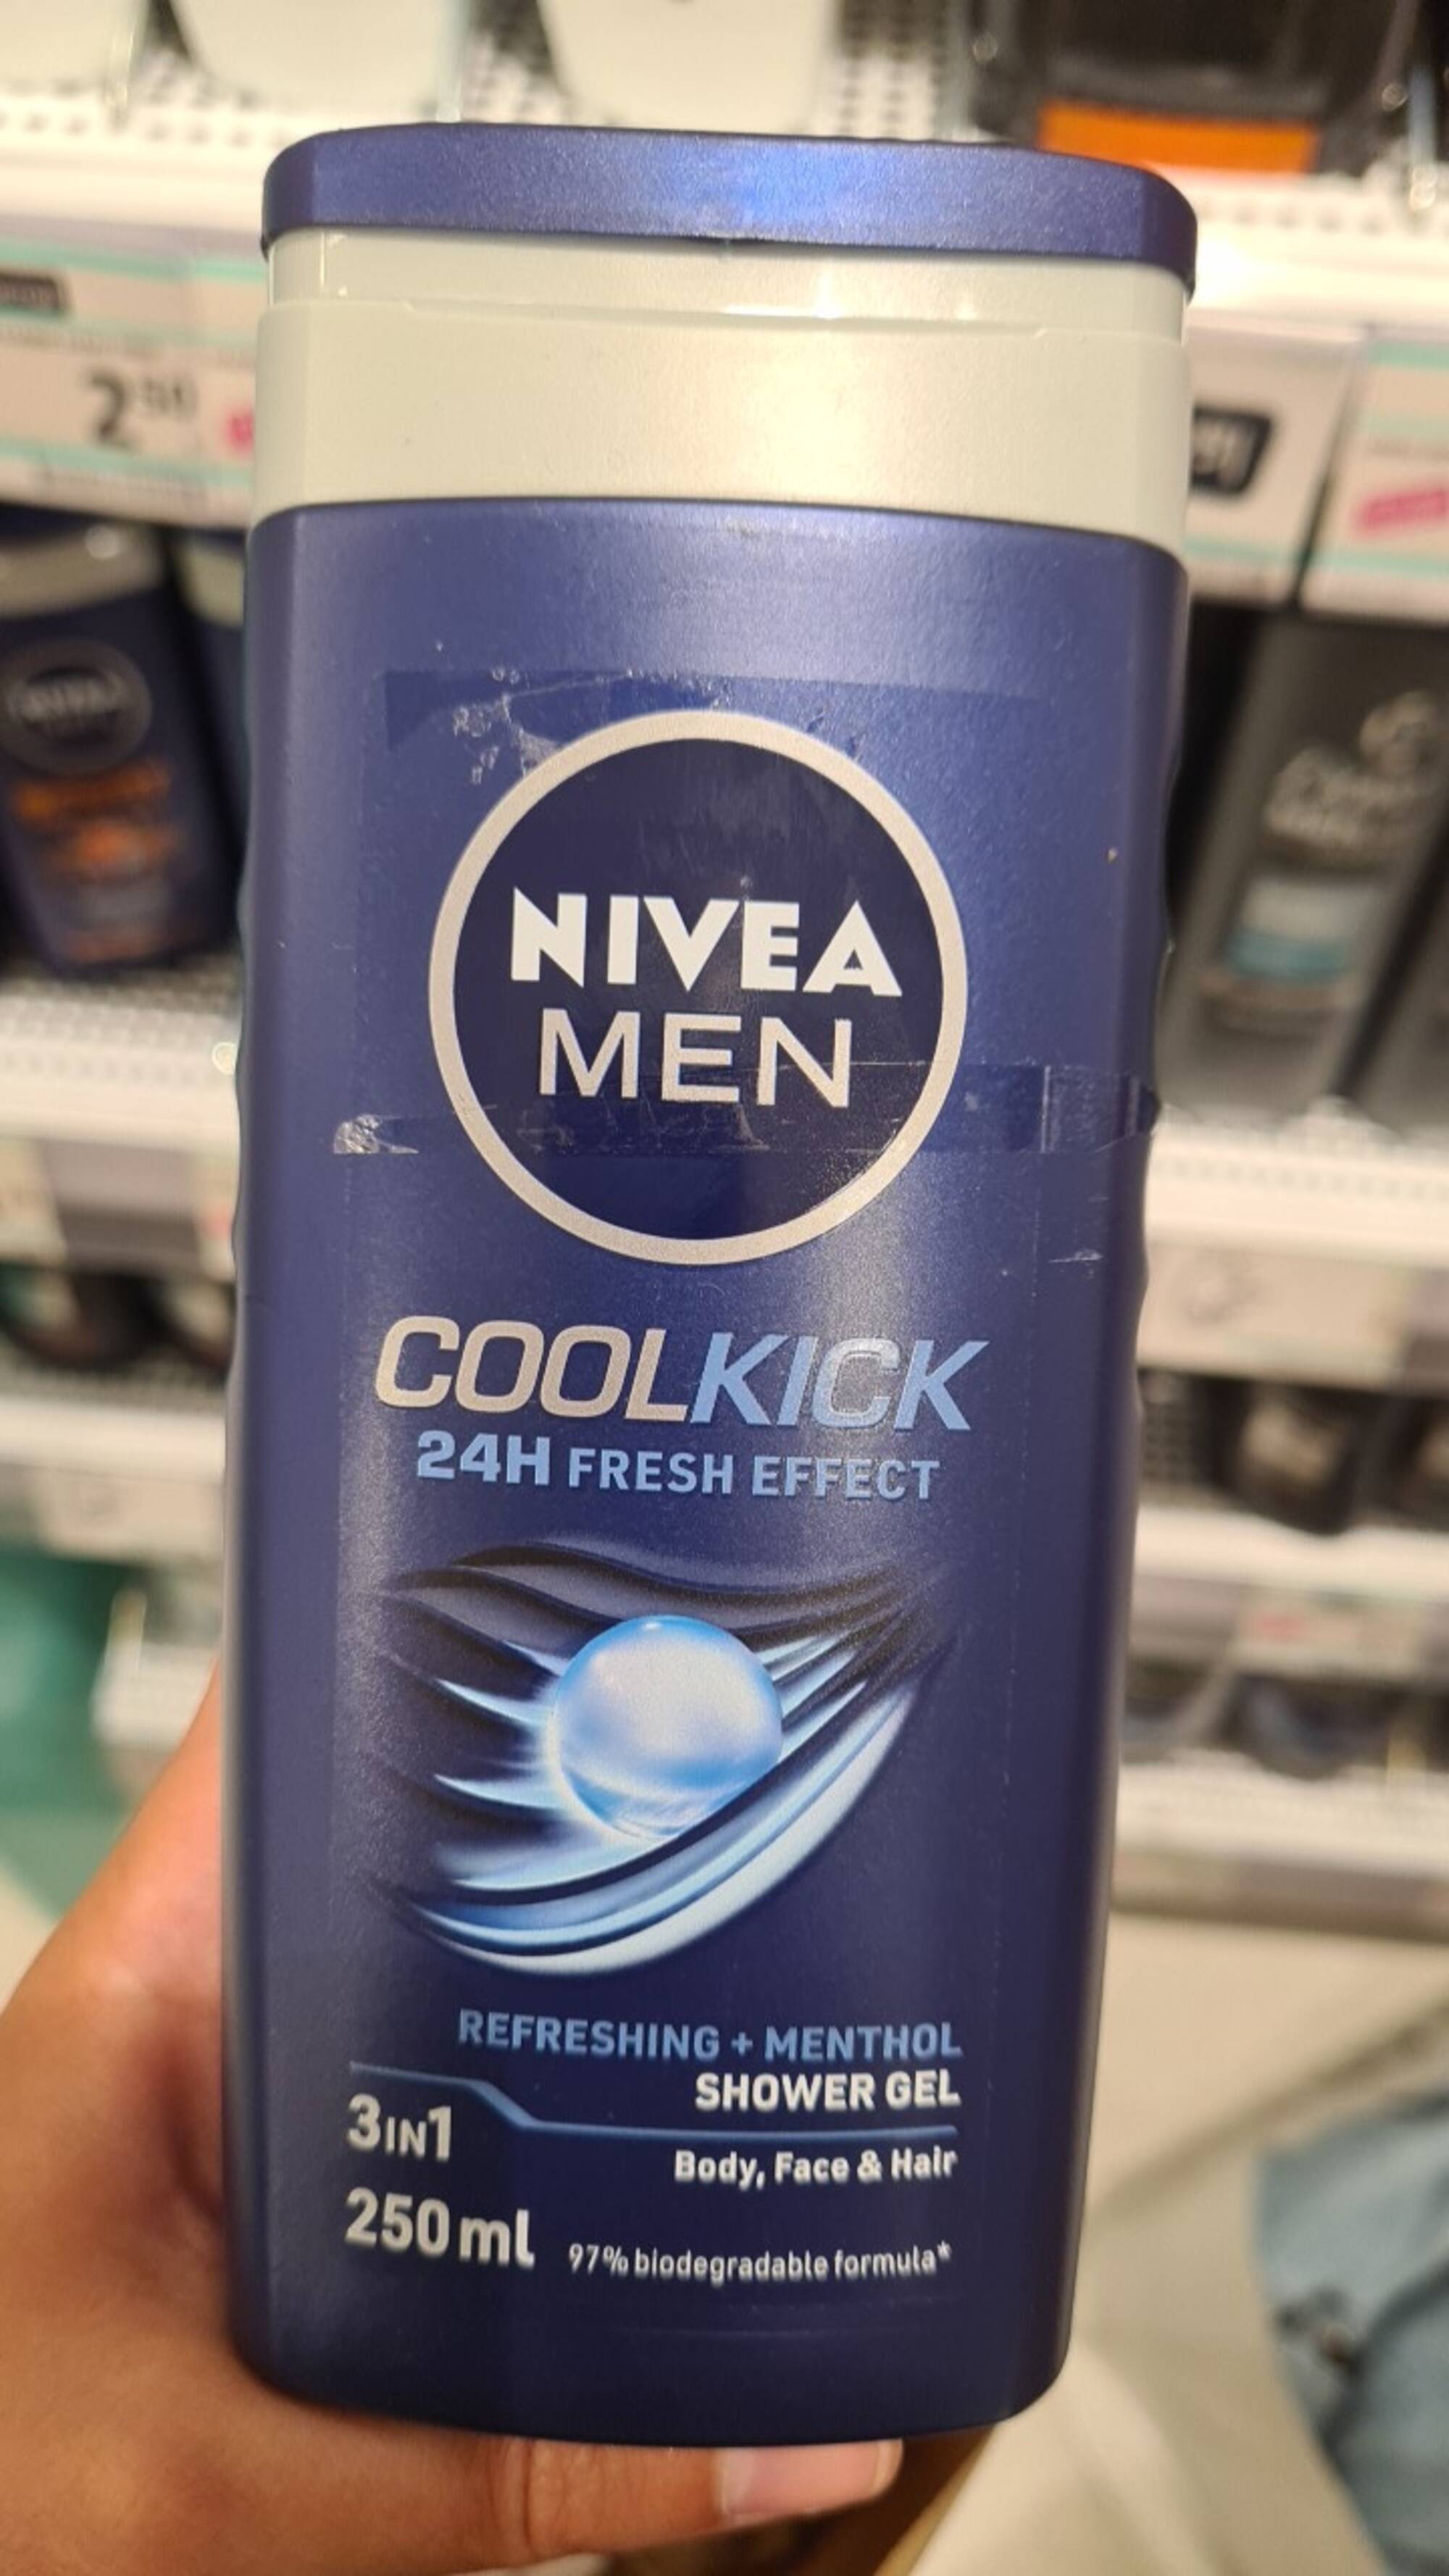 NIVEA - Men Cool kick - Shower gel 3 in 1